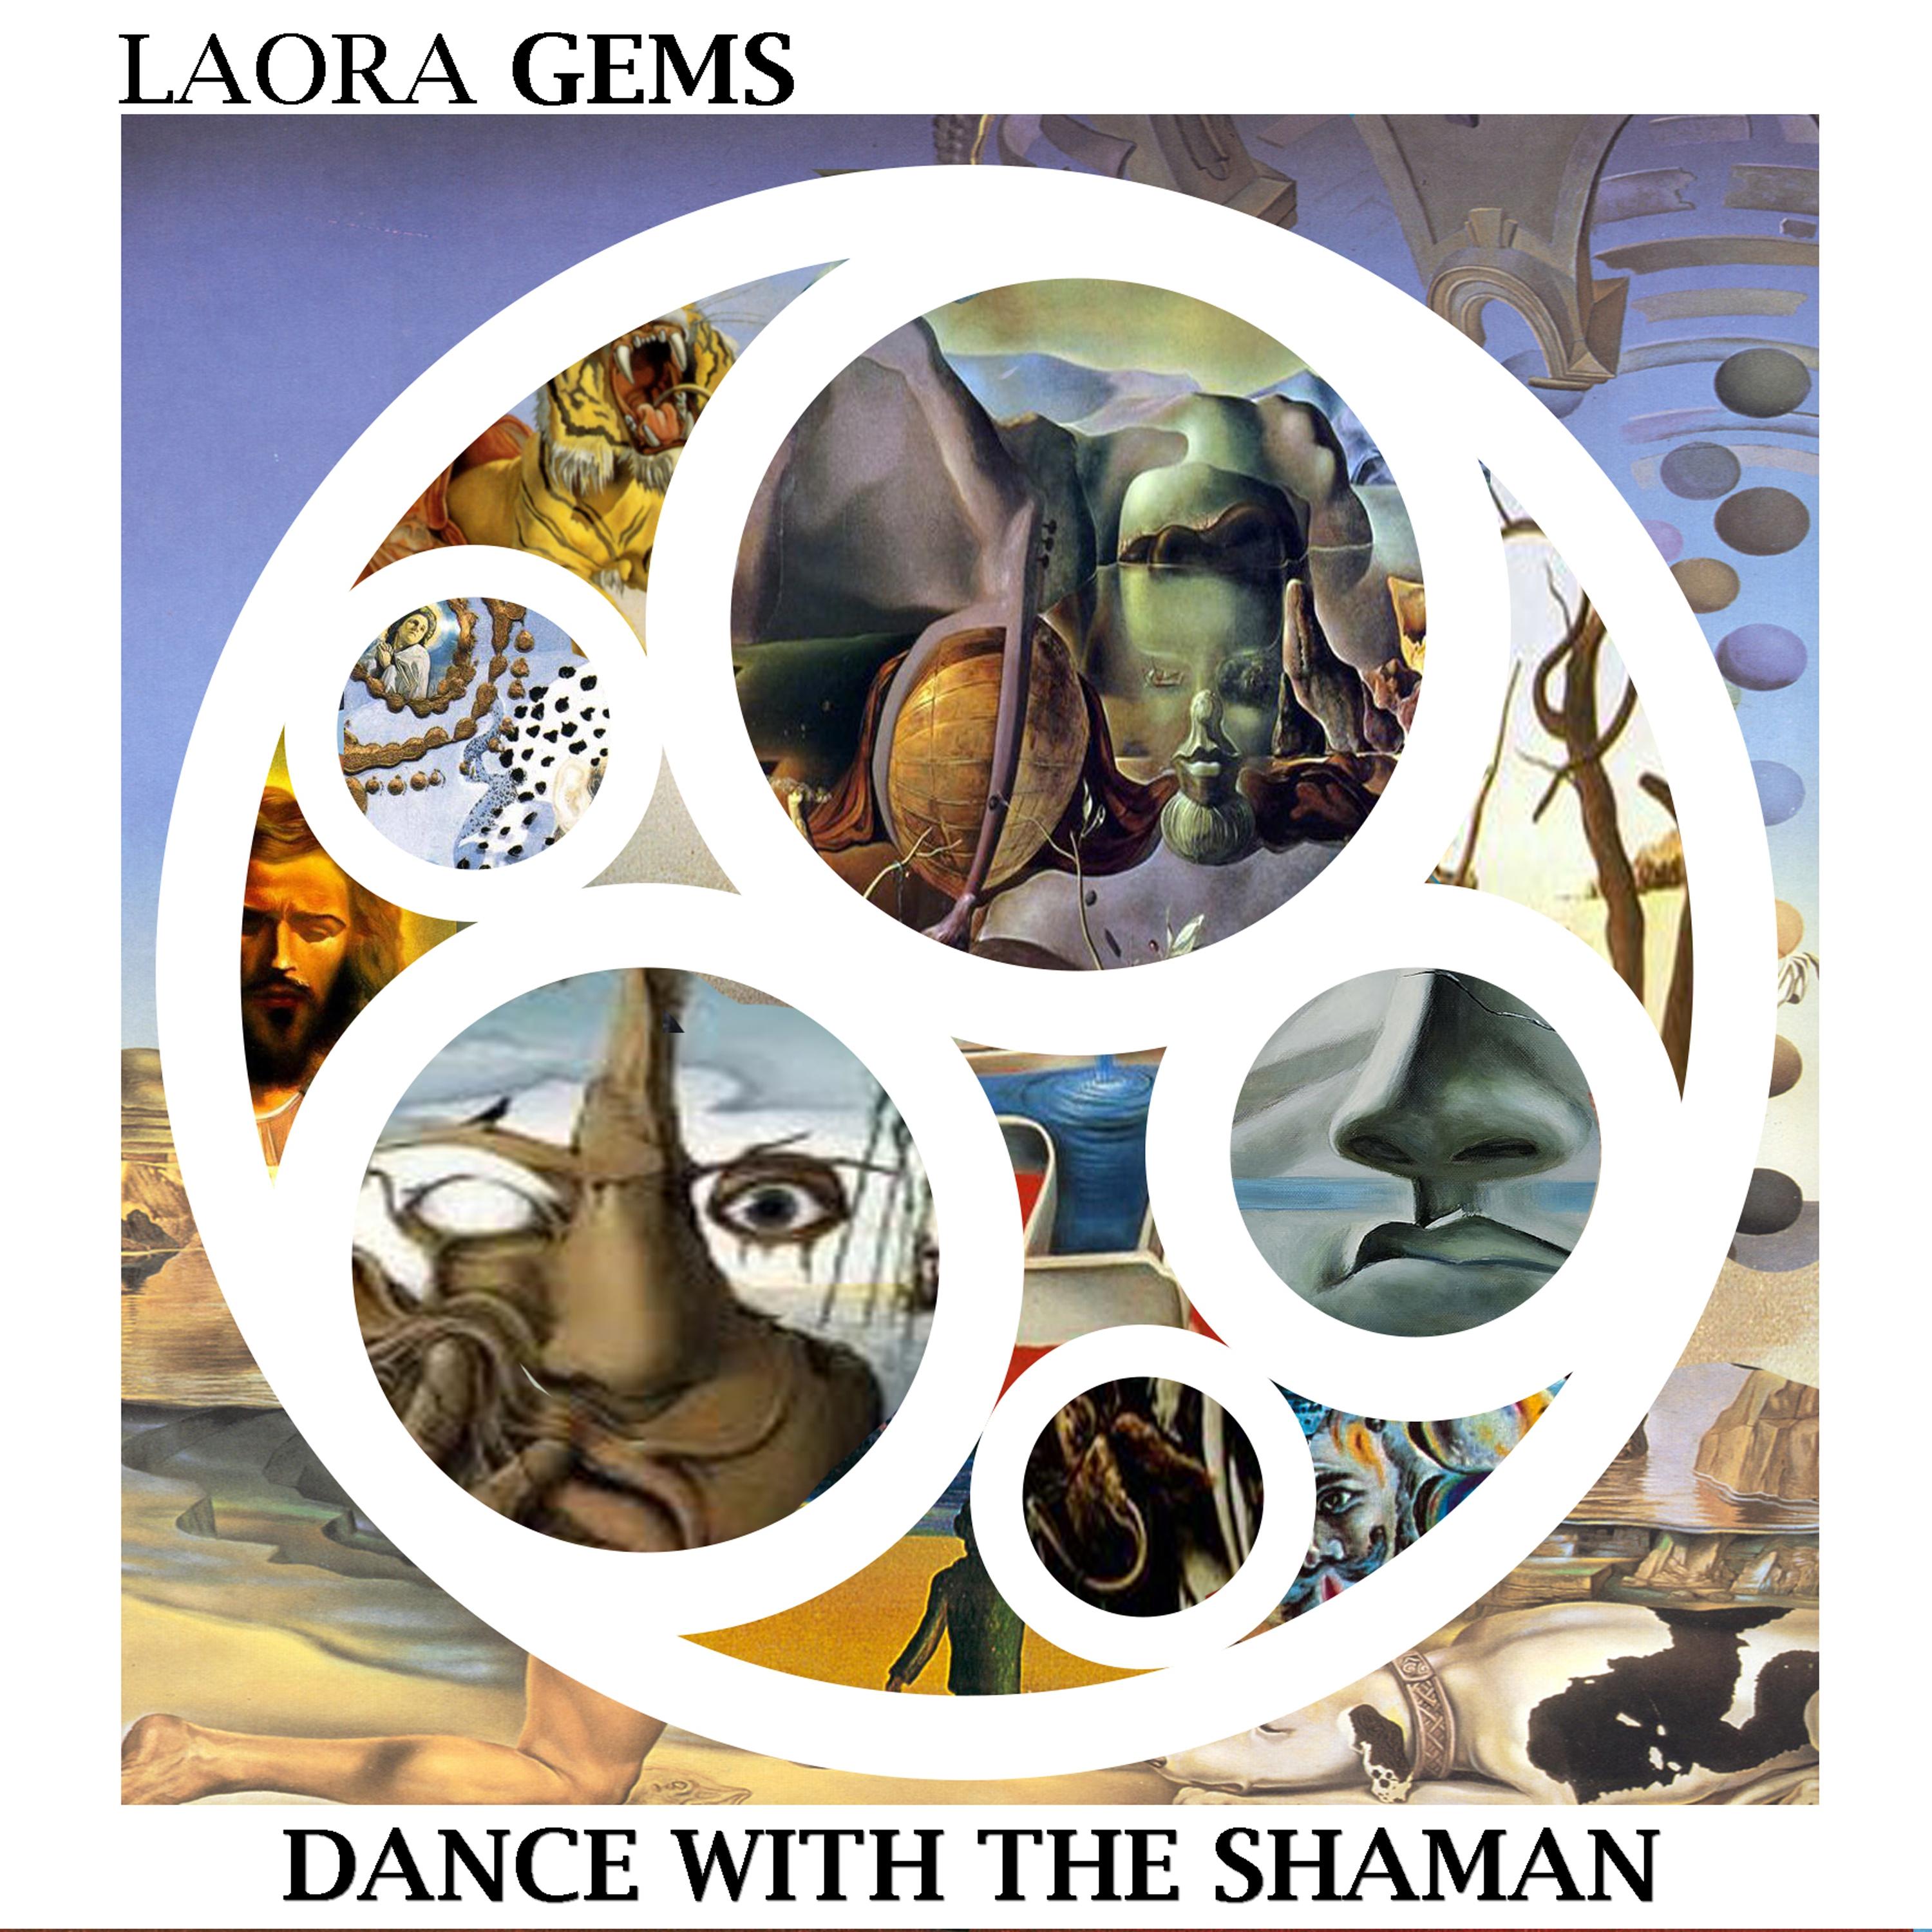 Laora Gems - The Experience